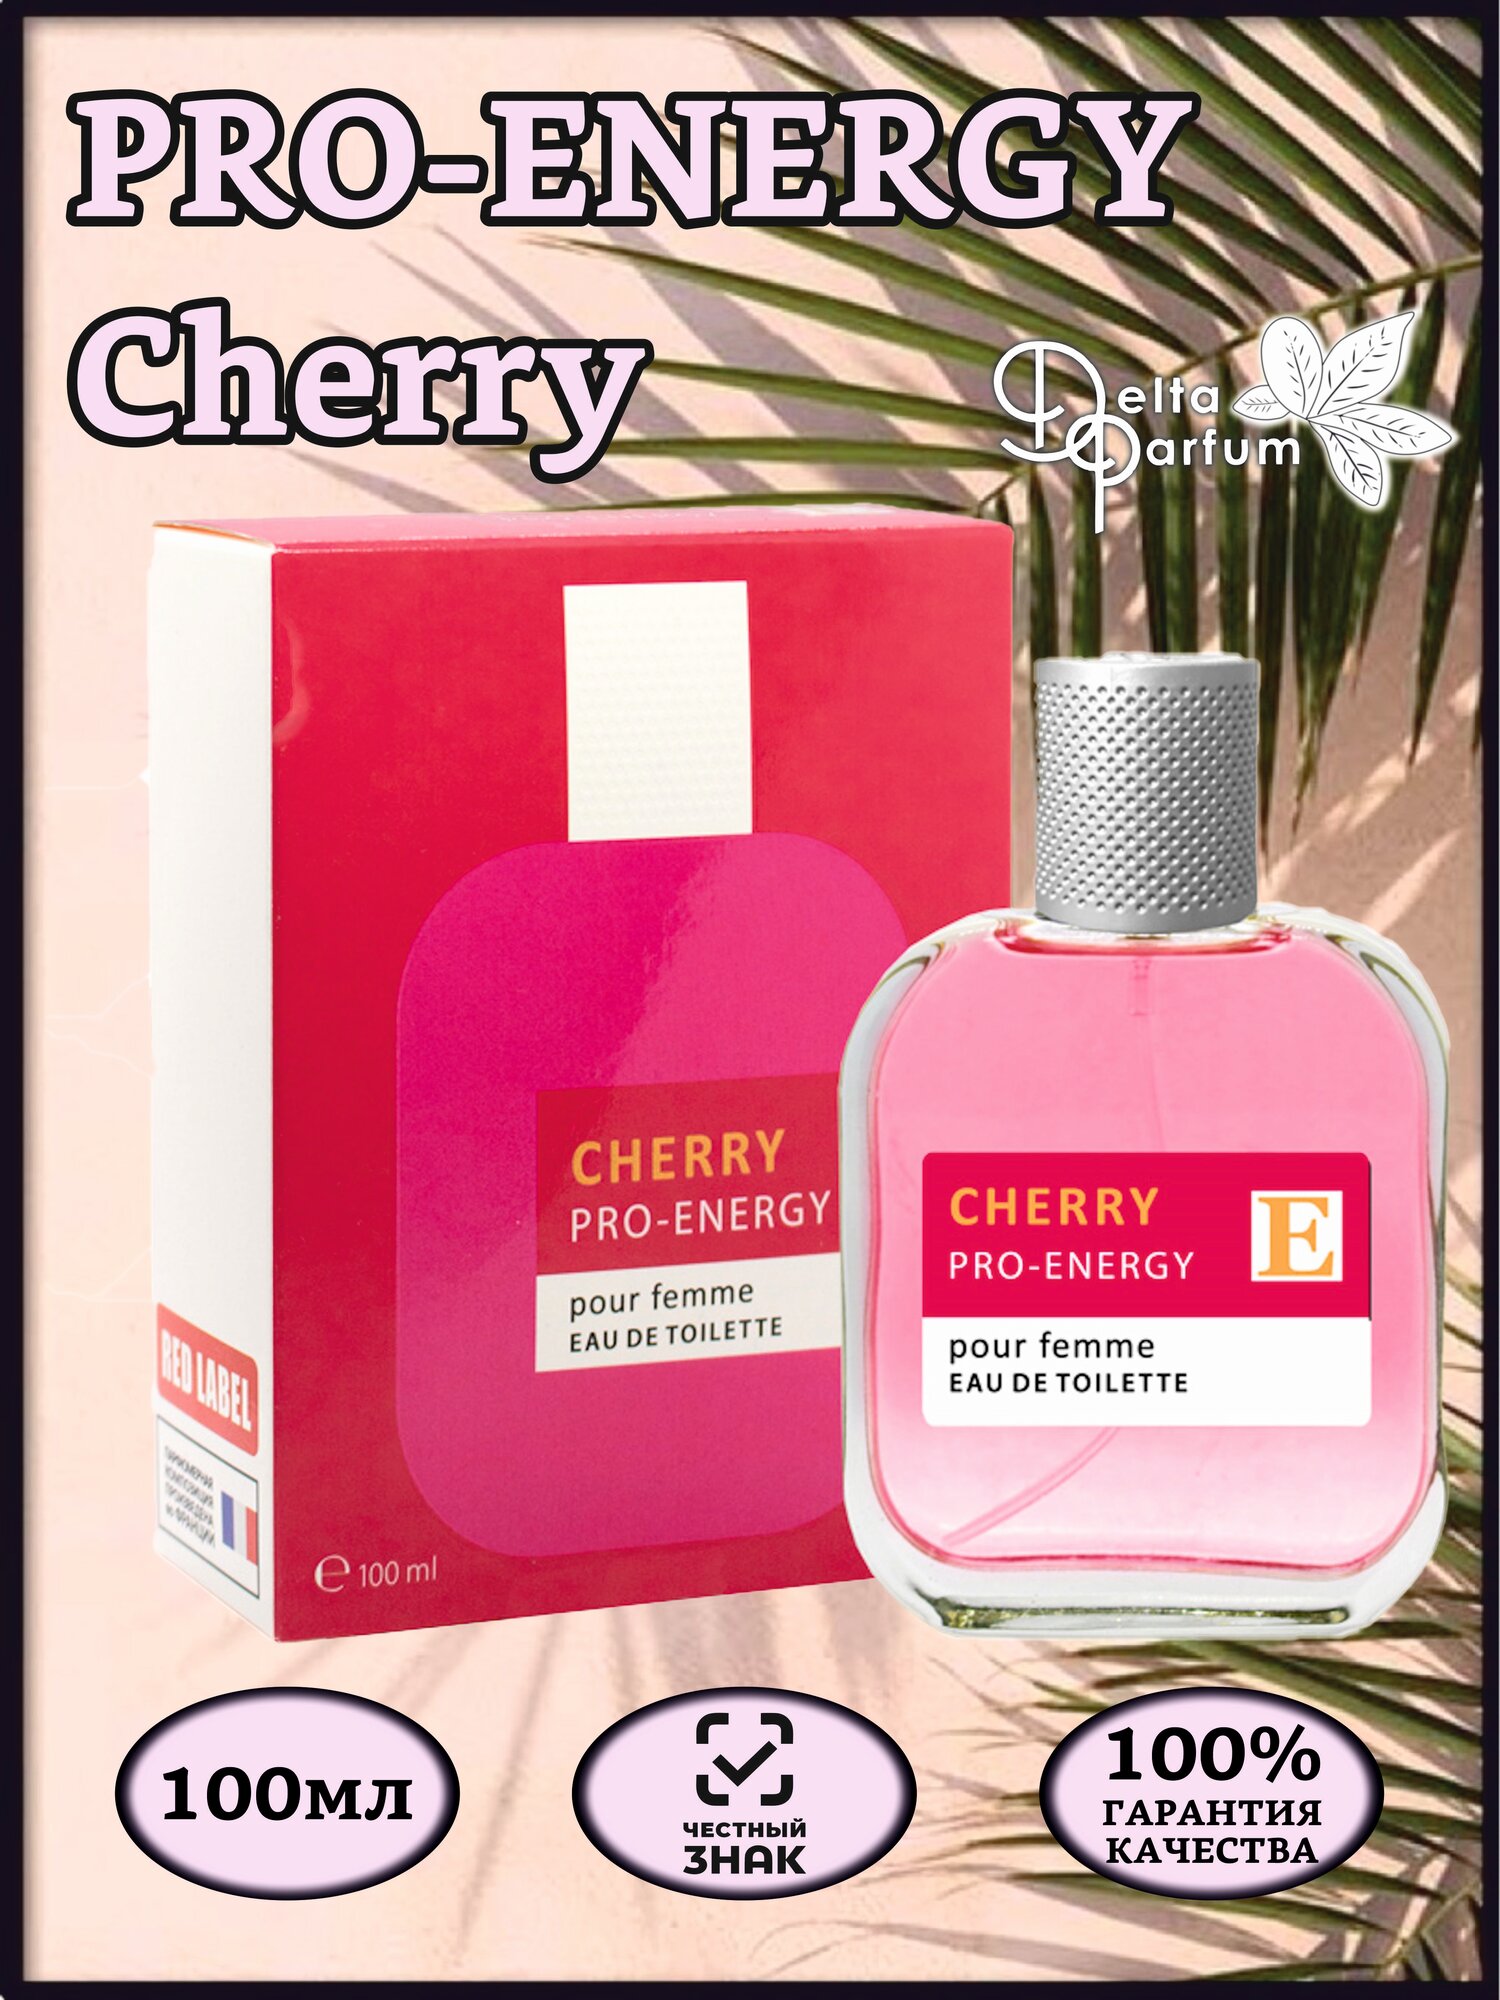 TODAY PARFUM (Delta parfum) Туалетная вода Pro-Energy Cherry